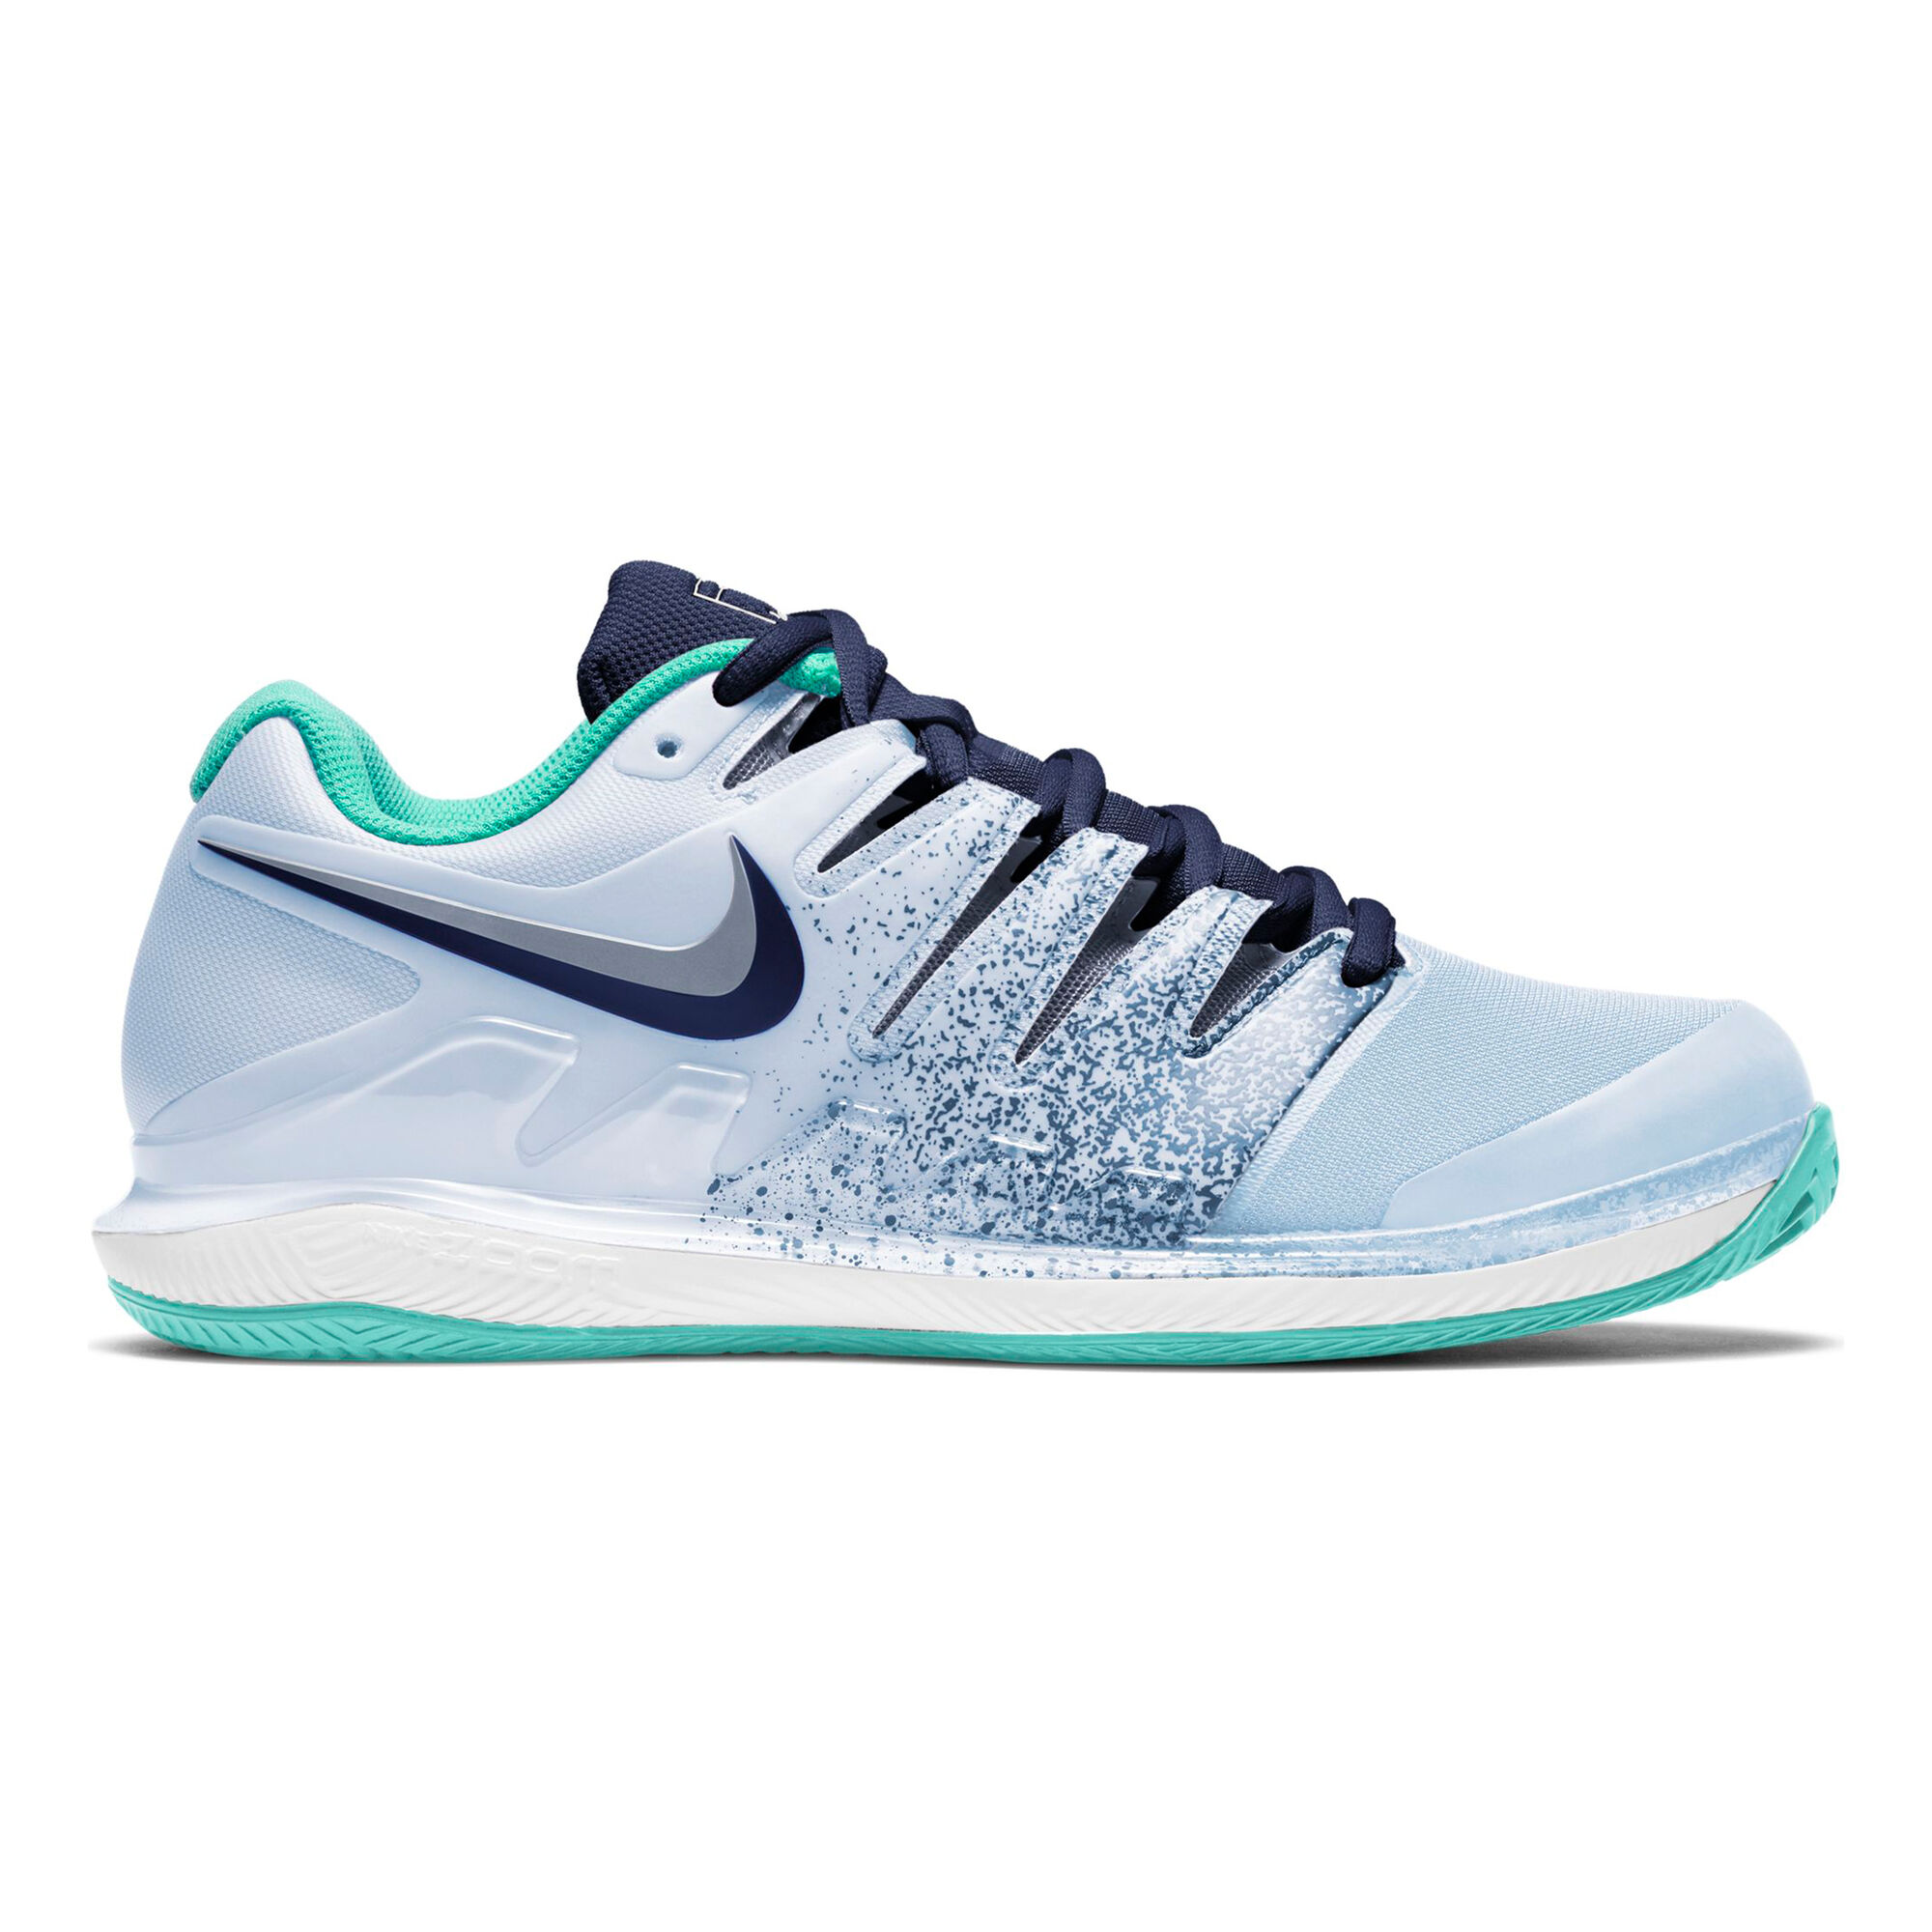 Buy Nike Air Zoom Vapor X Clay Court Shoe Women Light Blue Mint